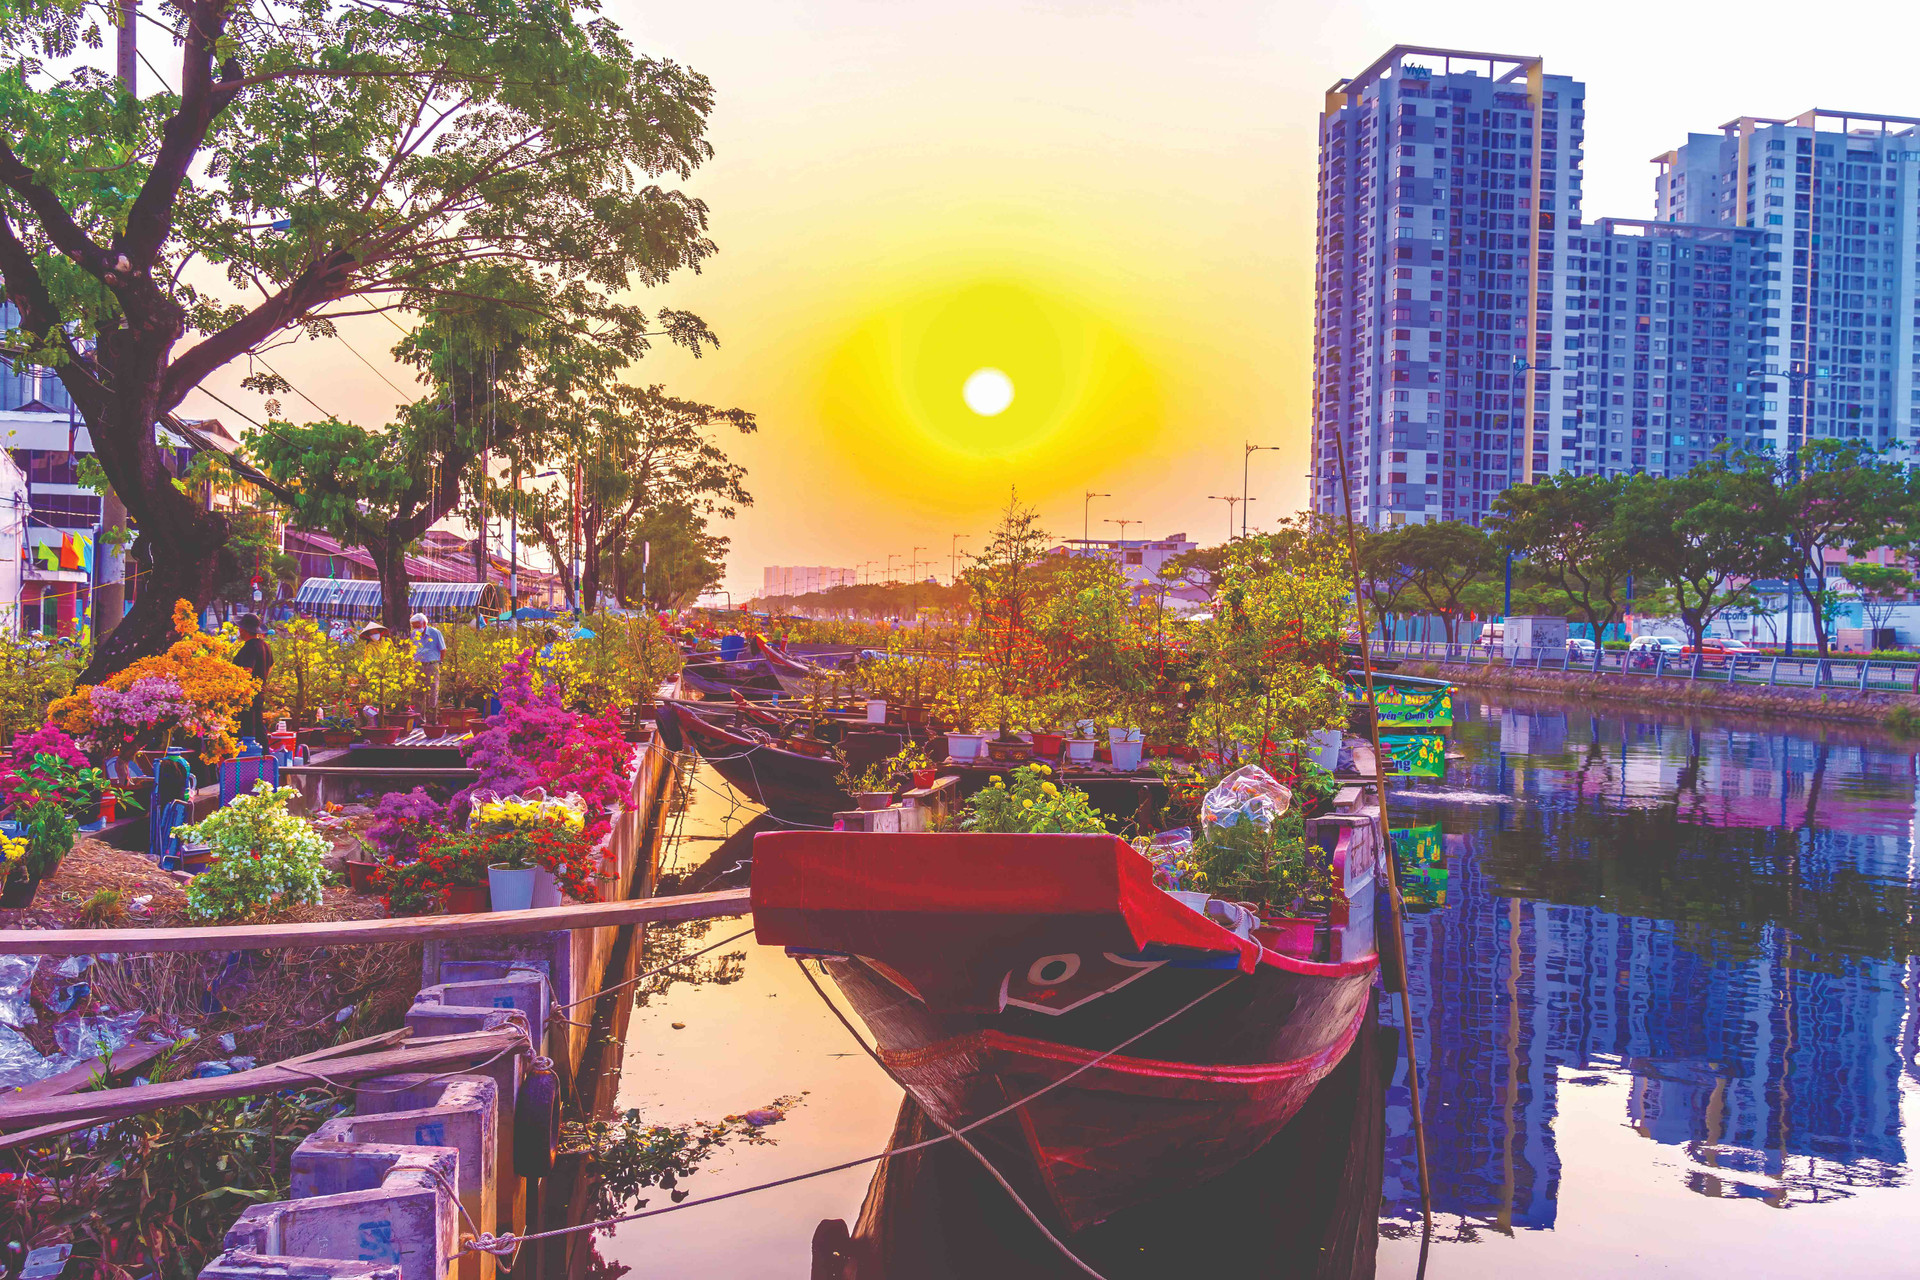 springtime-saigon-boat-canal-transport-spring-flower-tet-ben-binh-dong-open-air-market-vietnamese-happy-with-lunar-new-year-vietnam-compressed.jpeg